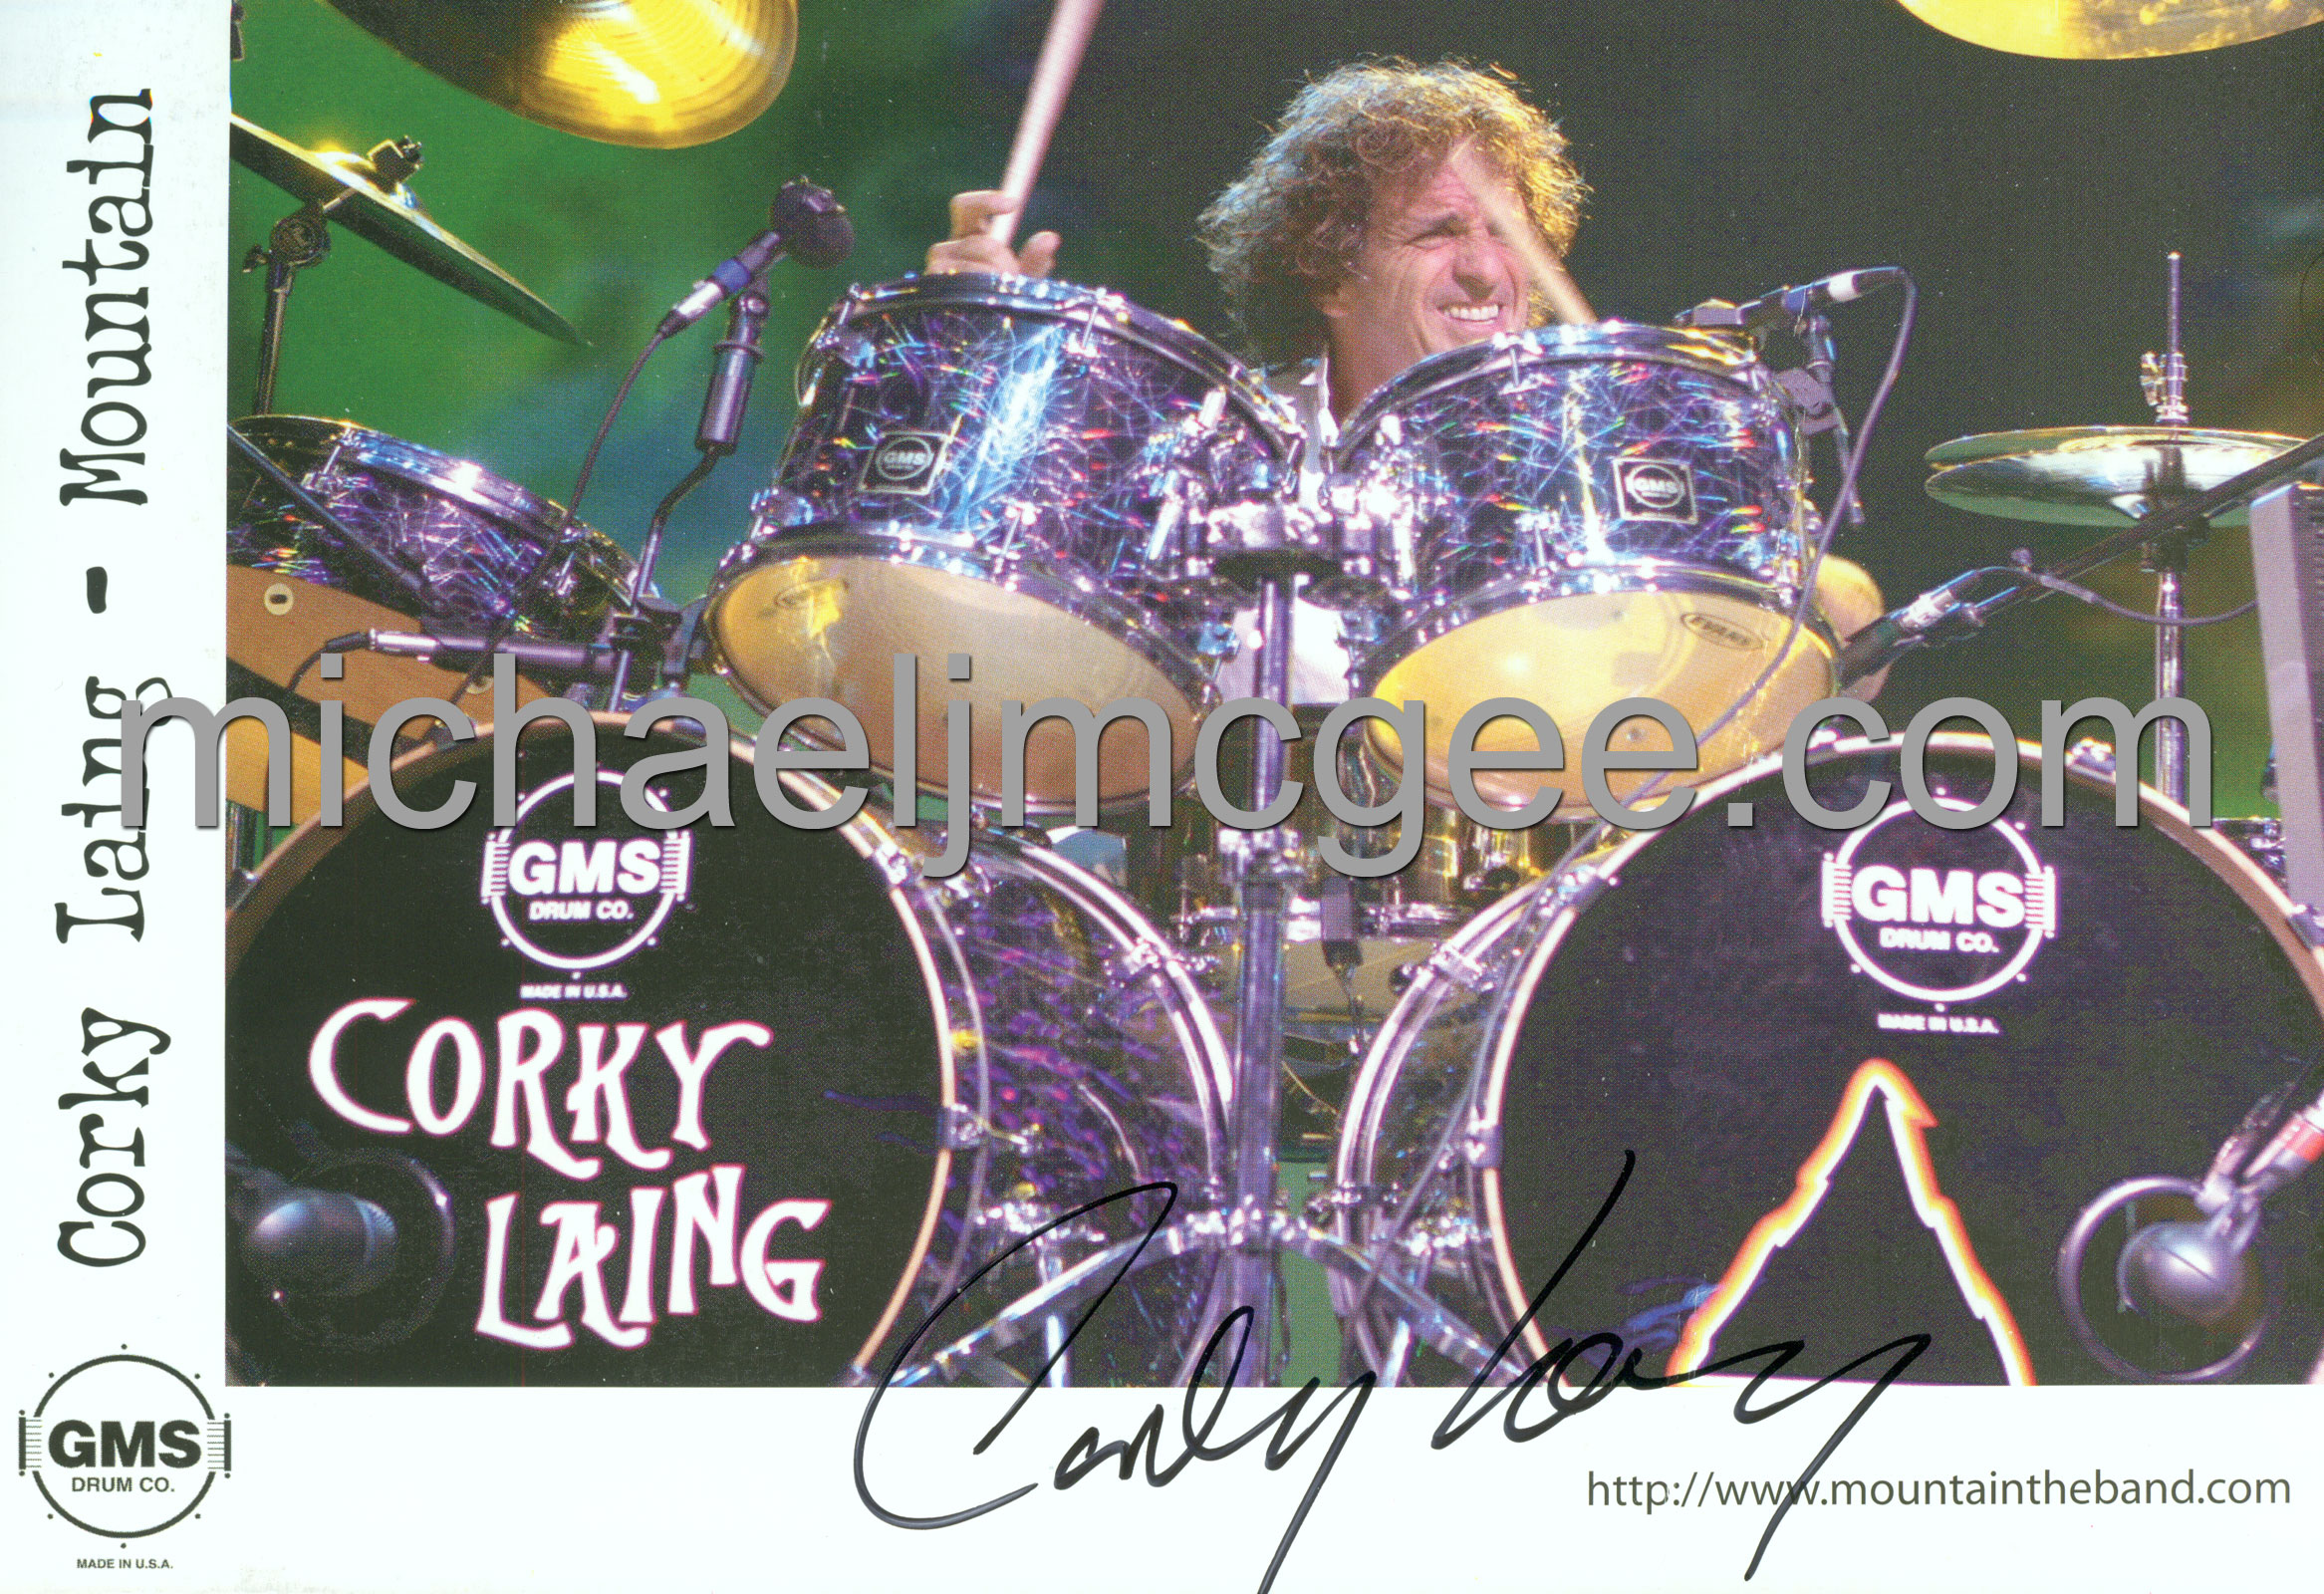 Corky Laing / michaeljmcgee.com